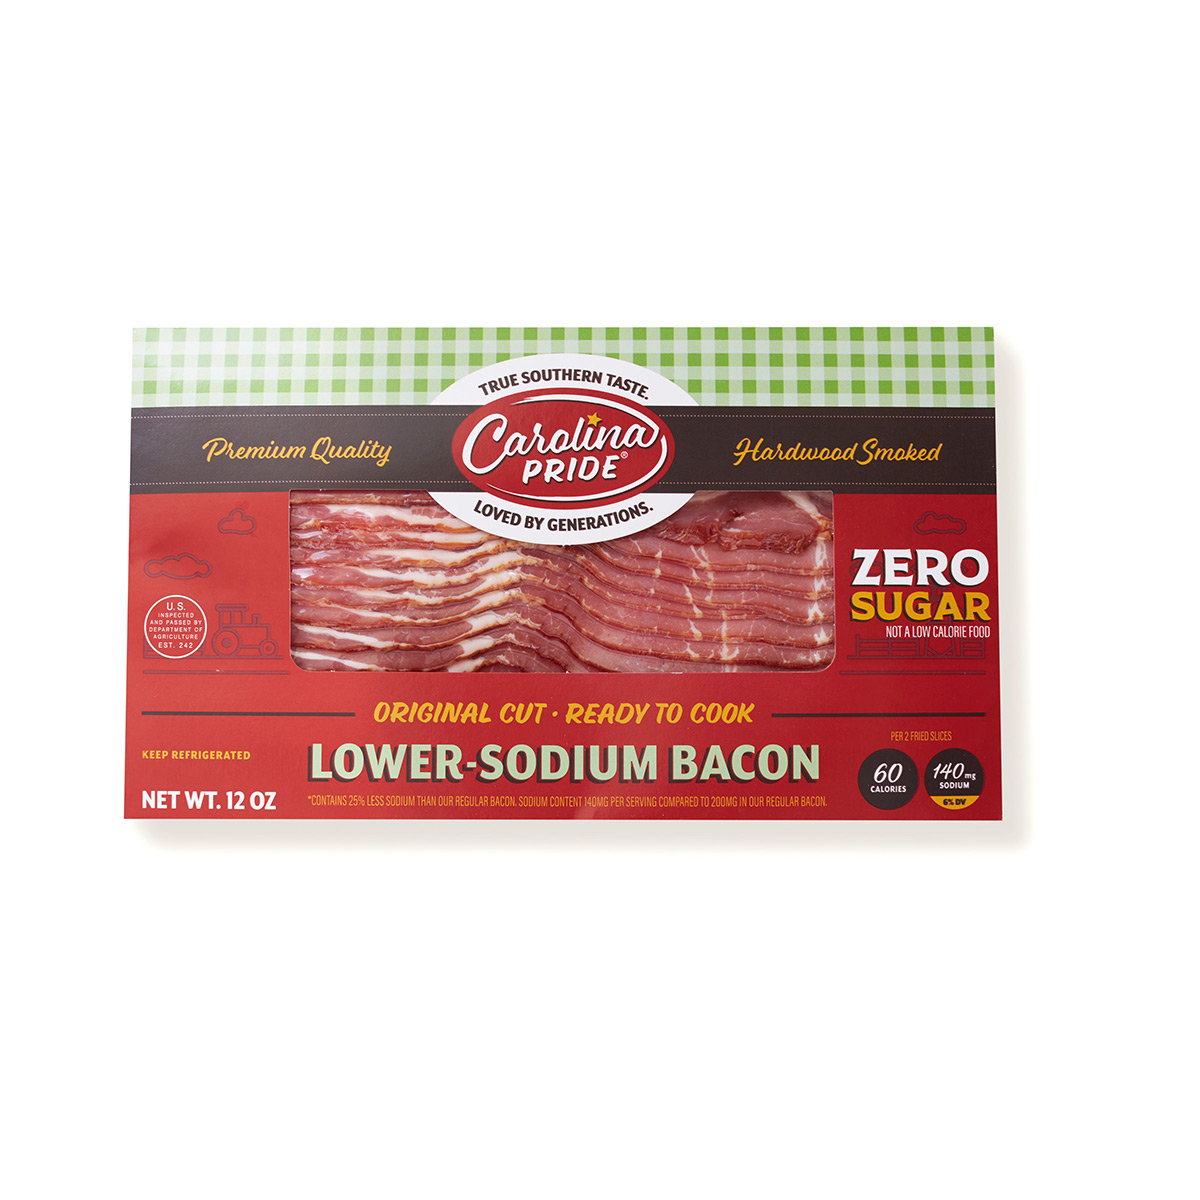 Lower-Sodium Bacon